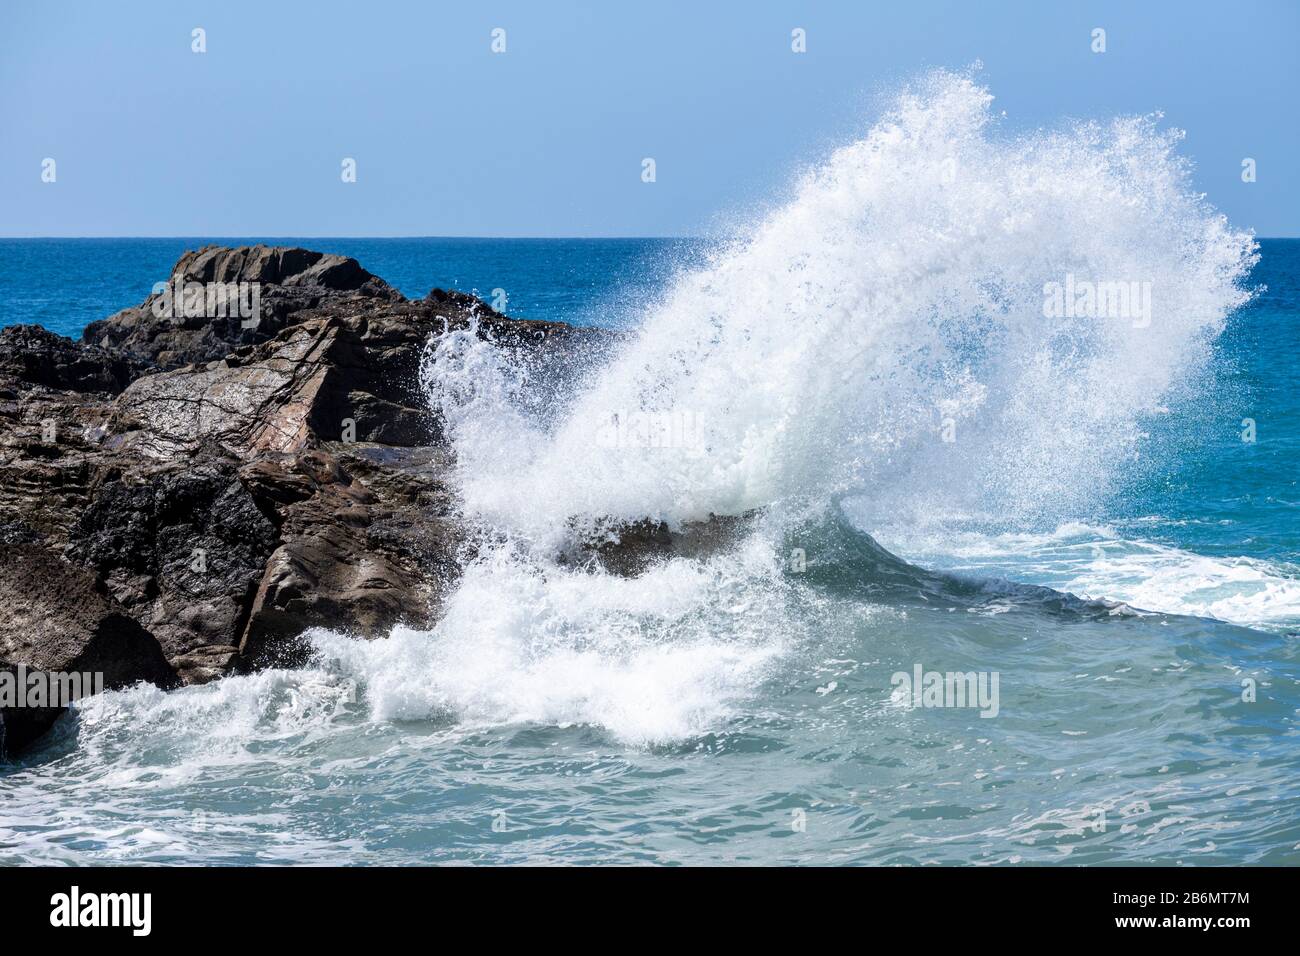 Heavy Atlantic seas with large waves crashing onto rocks on the beach at Ajuy on the Canary Island of Fuerteventura Stock Photo